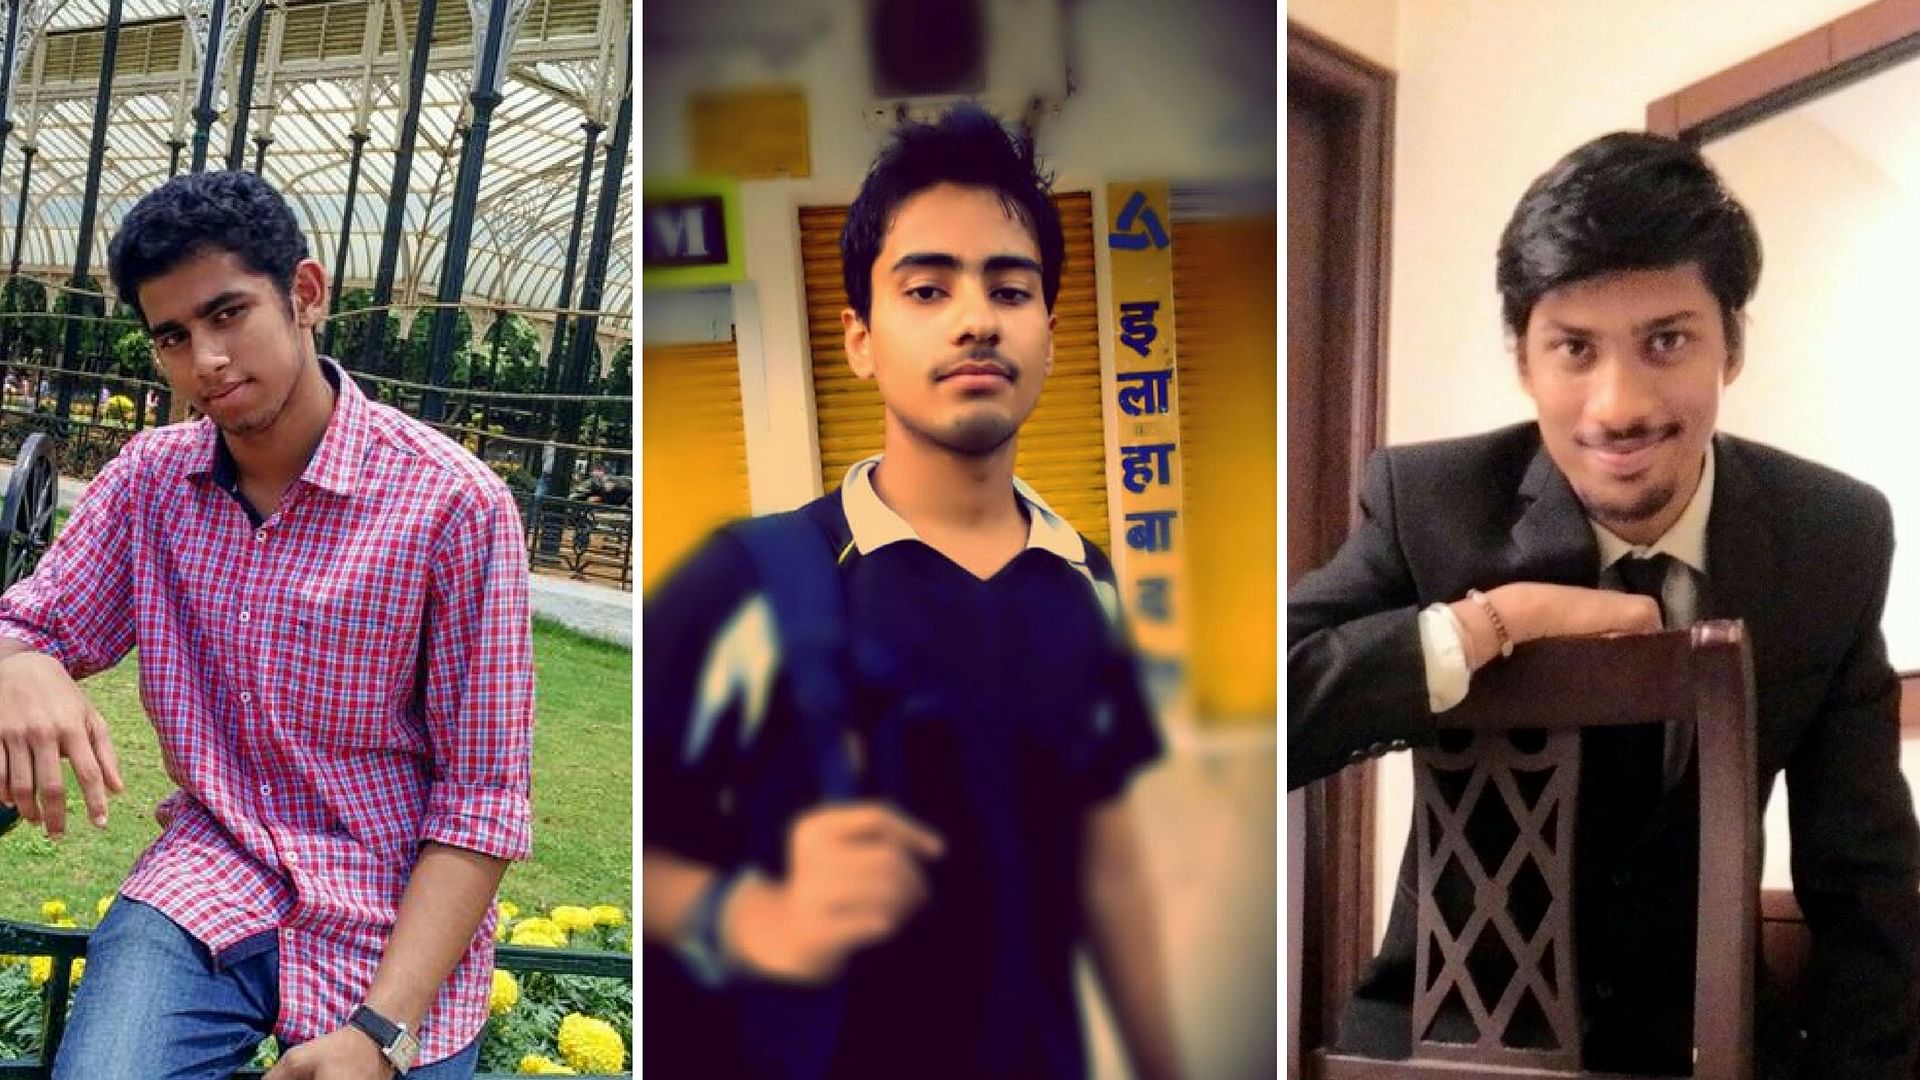 From left to right: Kenneth Jose, Anubhav Chandra and Aditya Patel. (Photo Courtesy: Facebook)